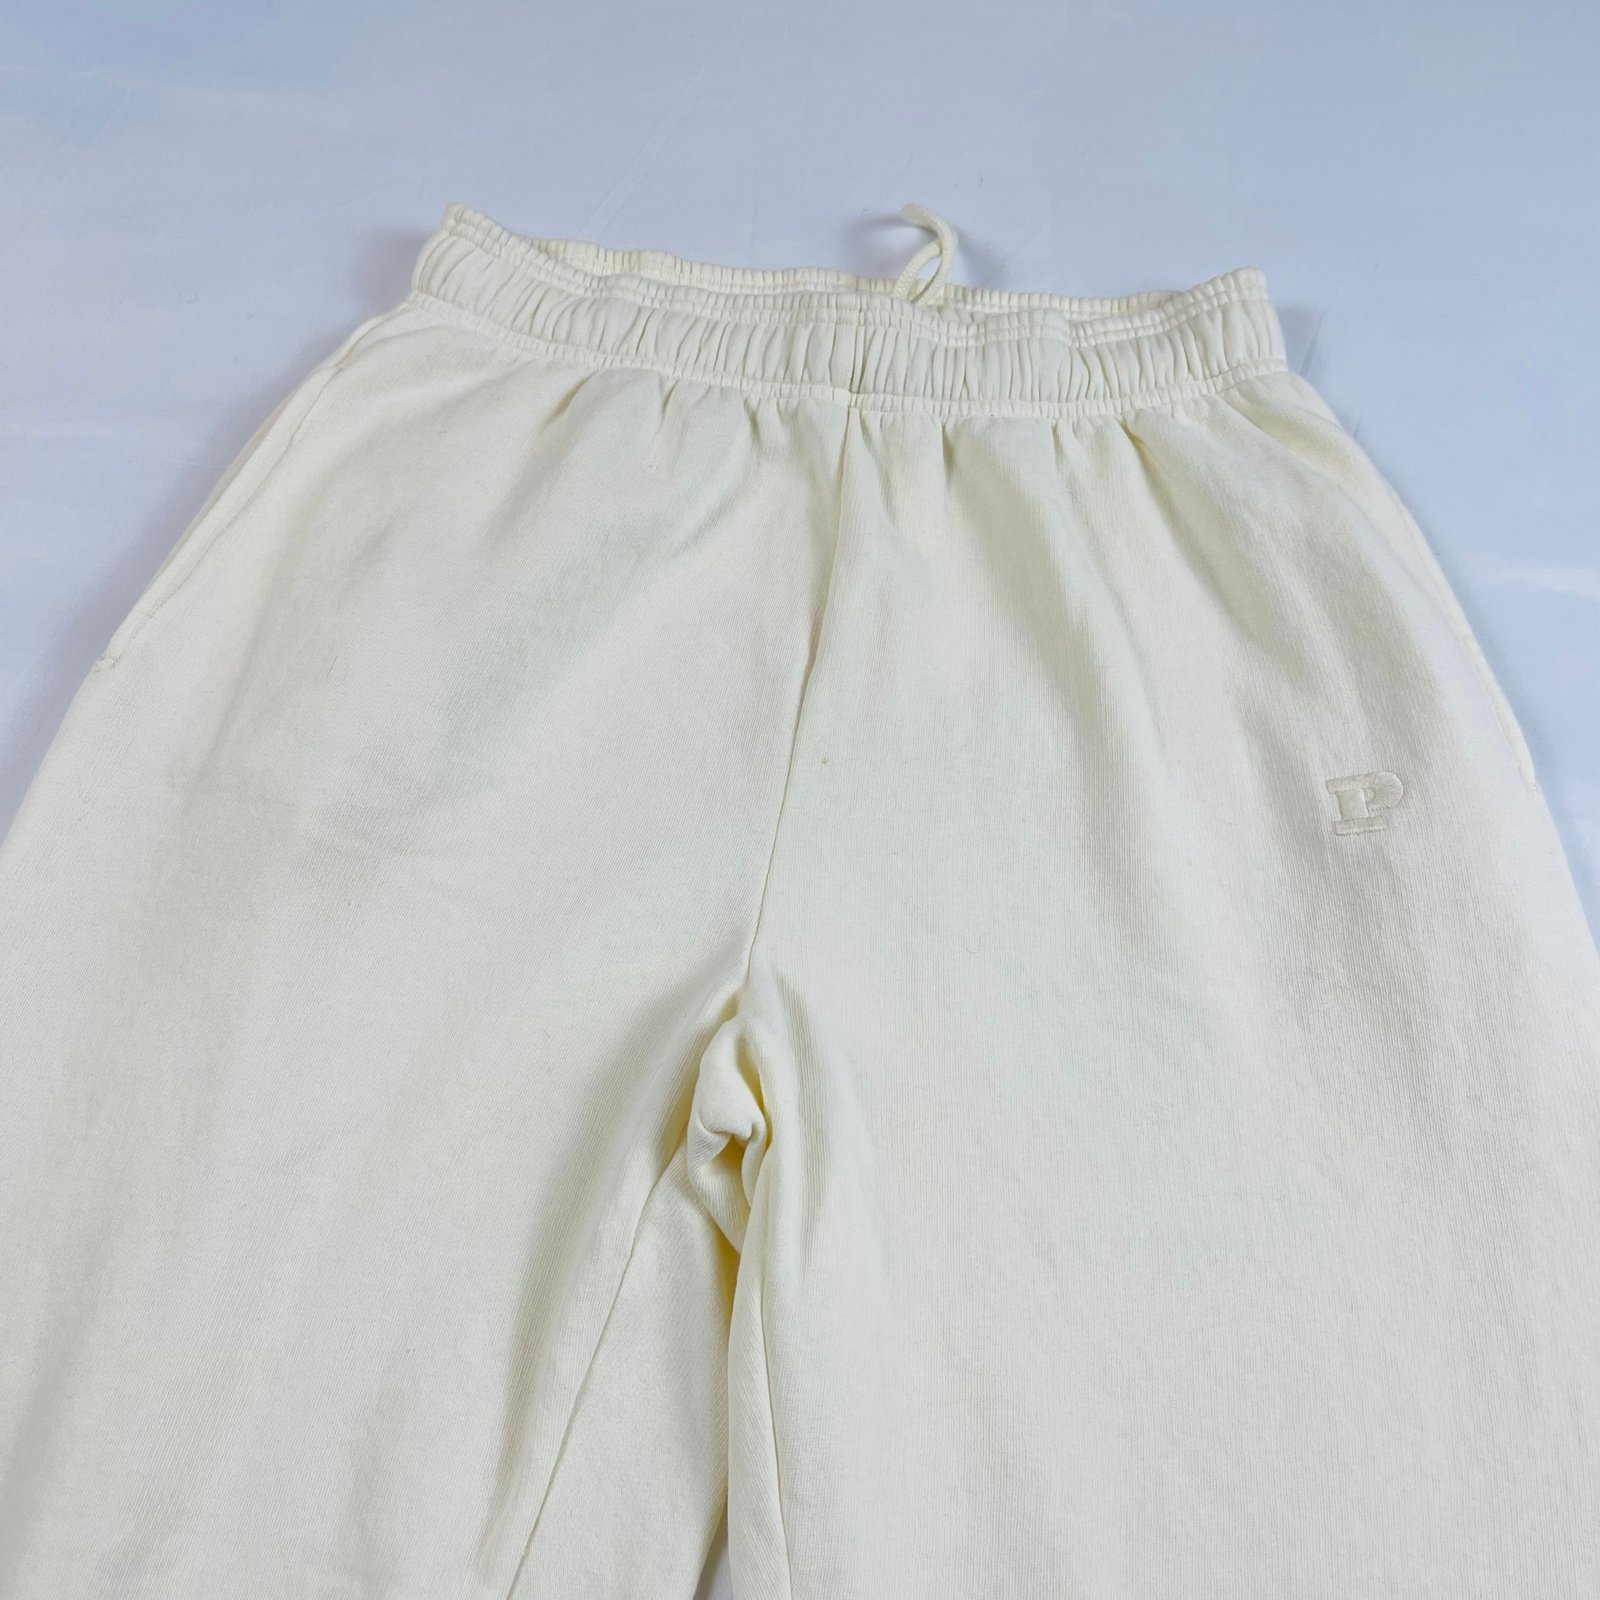 The Best Seller Pink Victoria Secret Sweatpants Womens Joggers Pants Ladies Size: Medium OC0HfuSfO US Sale